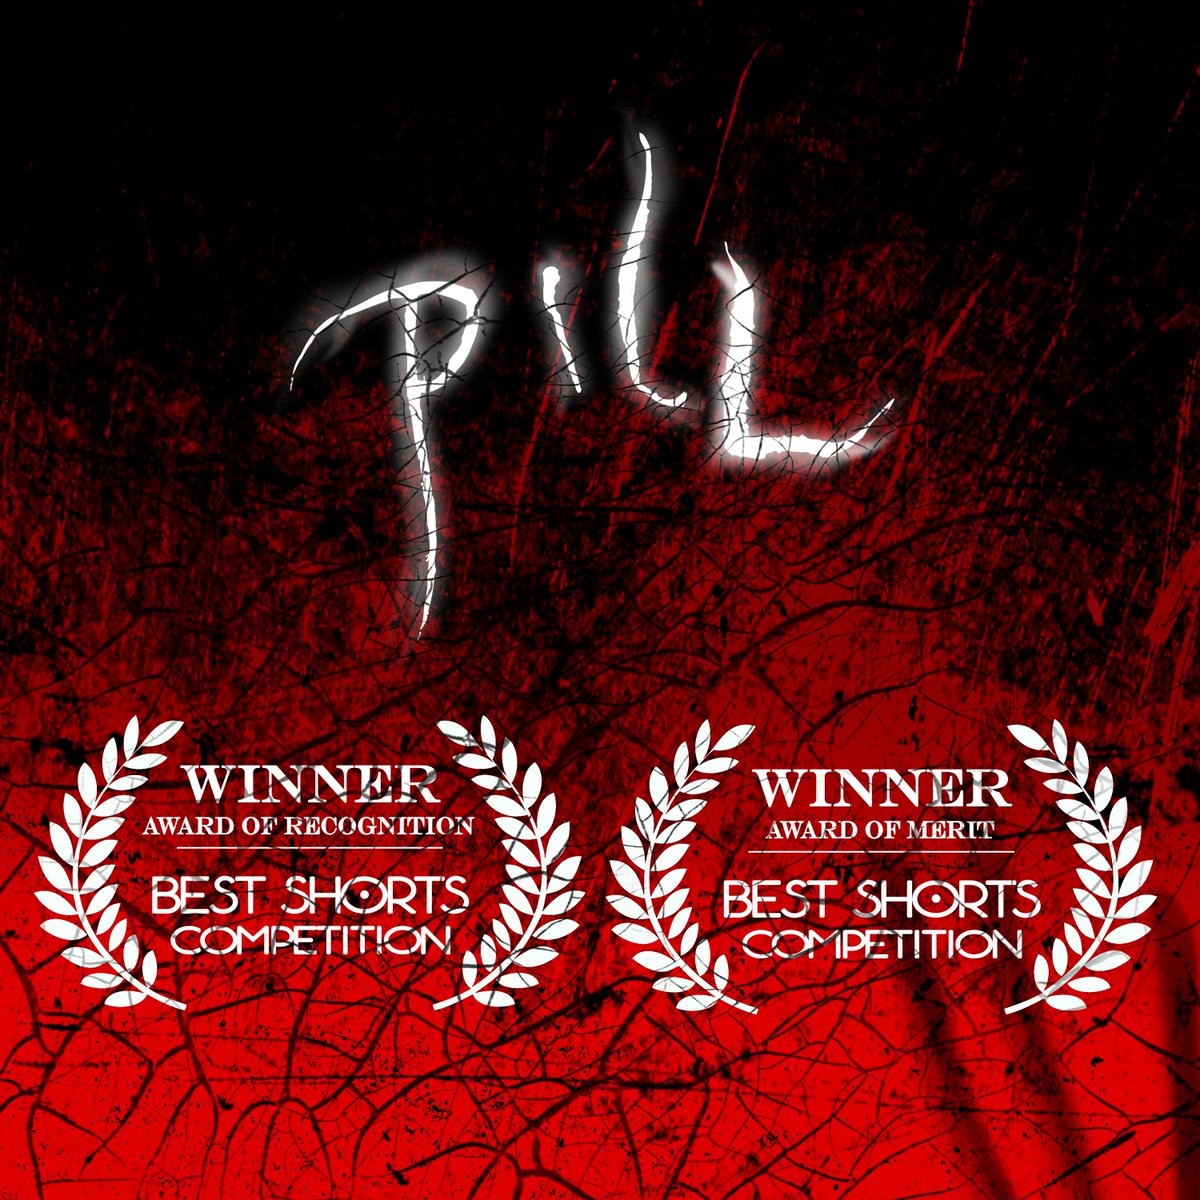 Our #horror #shortfilm PILL is a #WINNER at the @bestshorts Competition!
#HorrorCommunity #HorrorMovies #HorrorFam #filmmakers #Filmmaking #filmmaker #FilmFestival #filmfestival2021